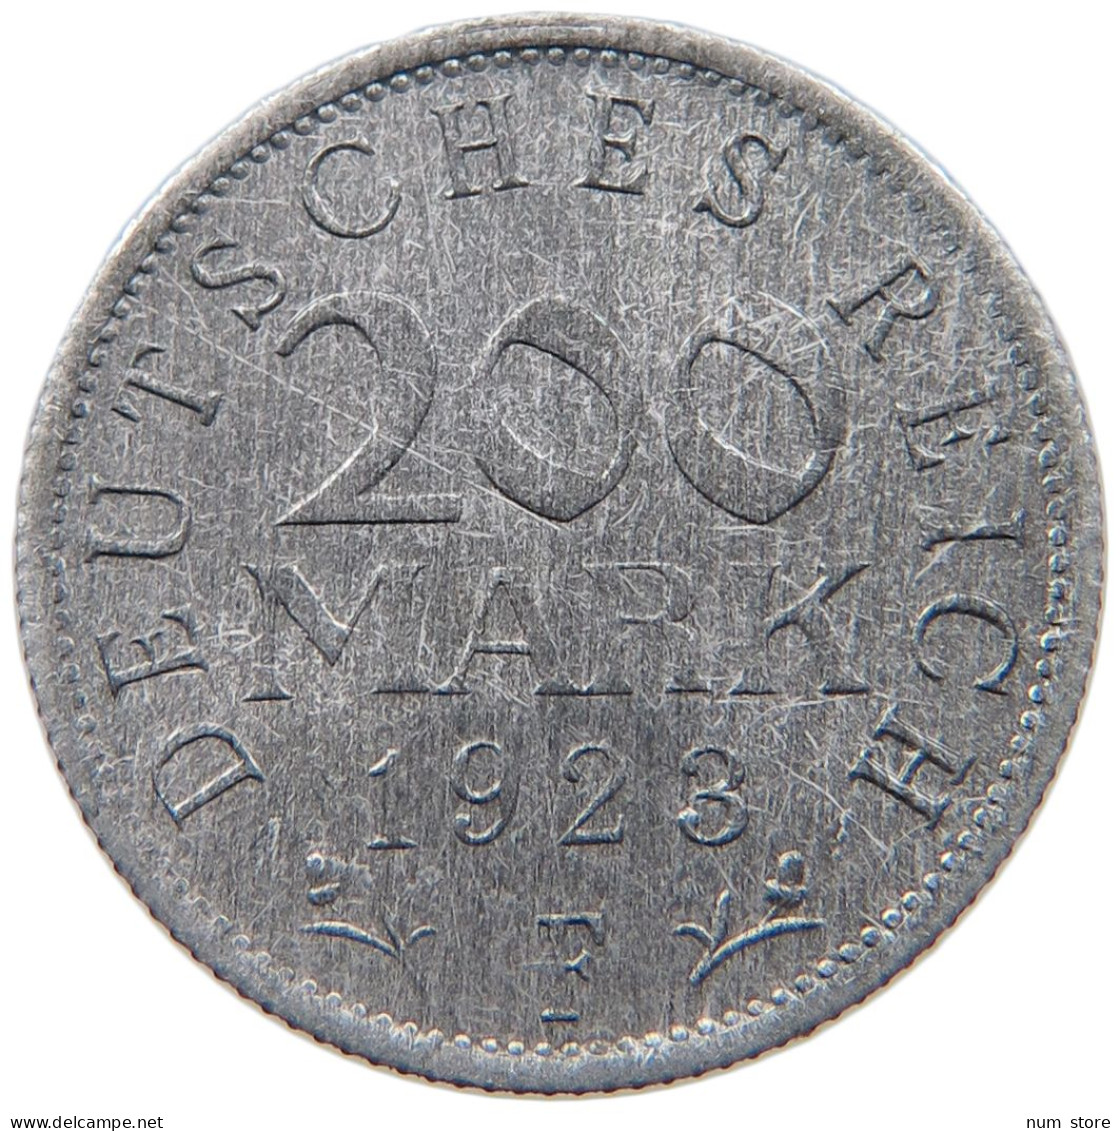 WEIMARER REPUBLIK 200 MARK 1923 F  #MA 098779 - 200 & 500 Mark